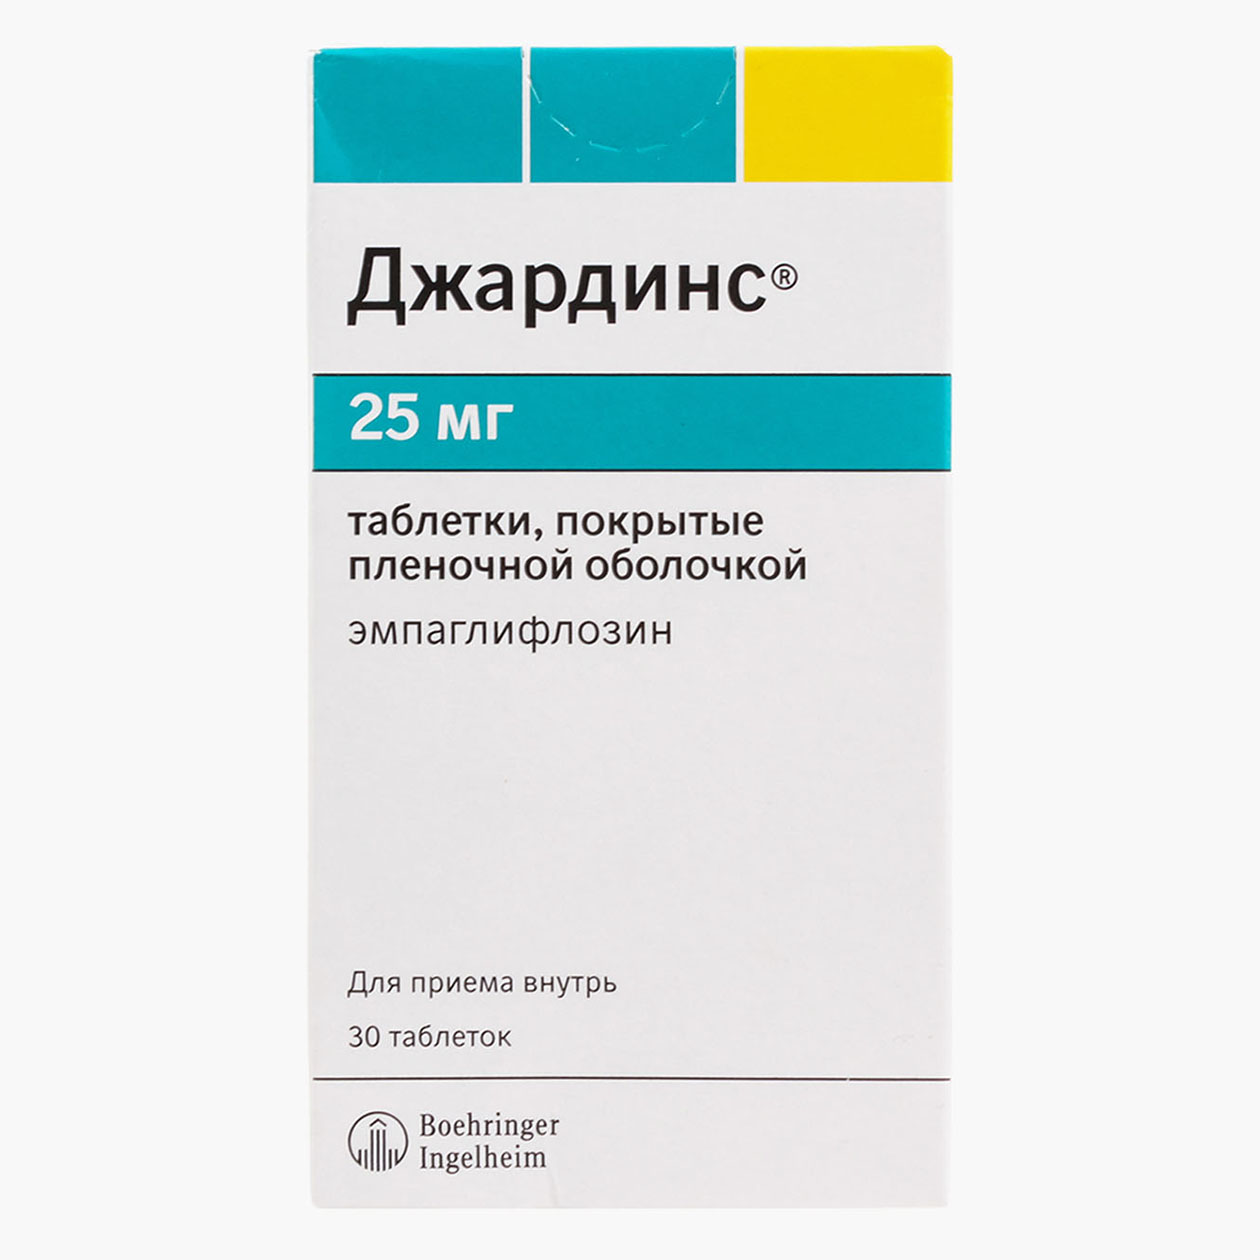 Эмпаглифлозин — 30 таблеток. Источник: eapteka.ru